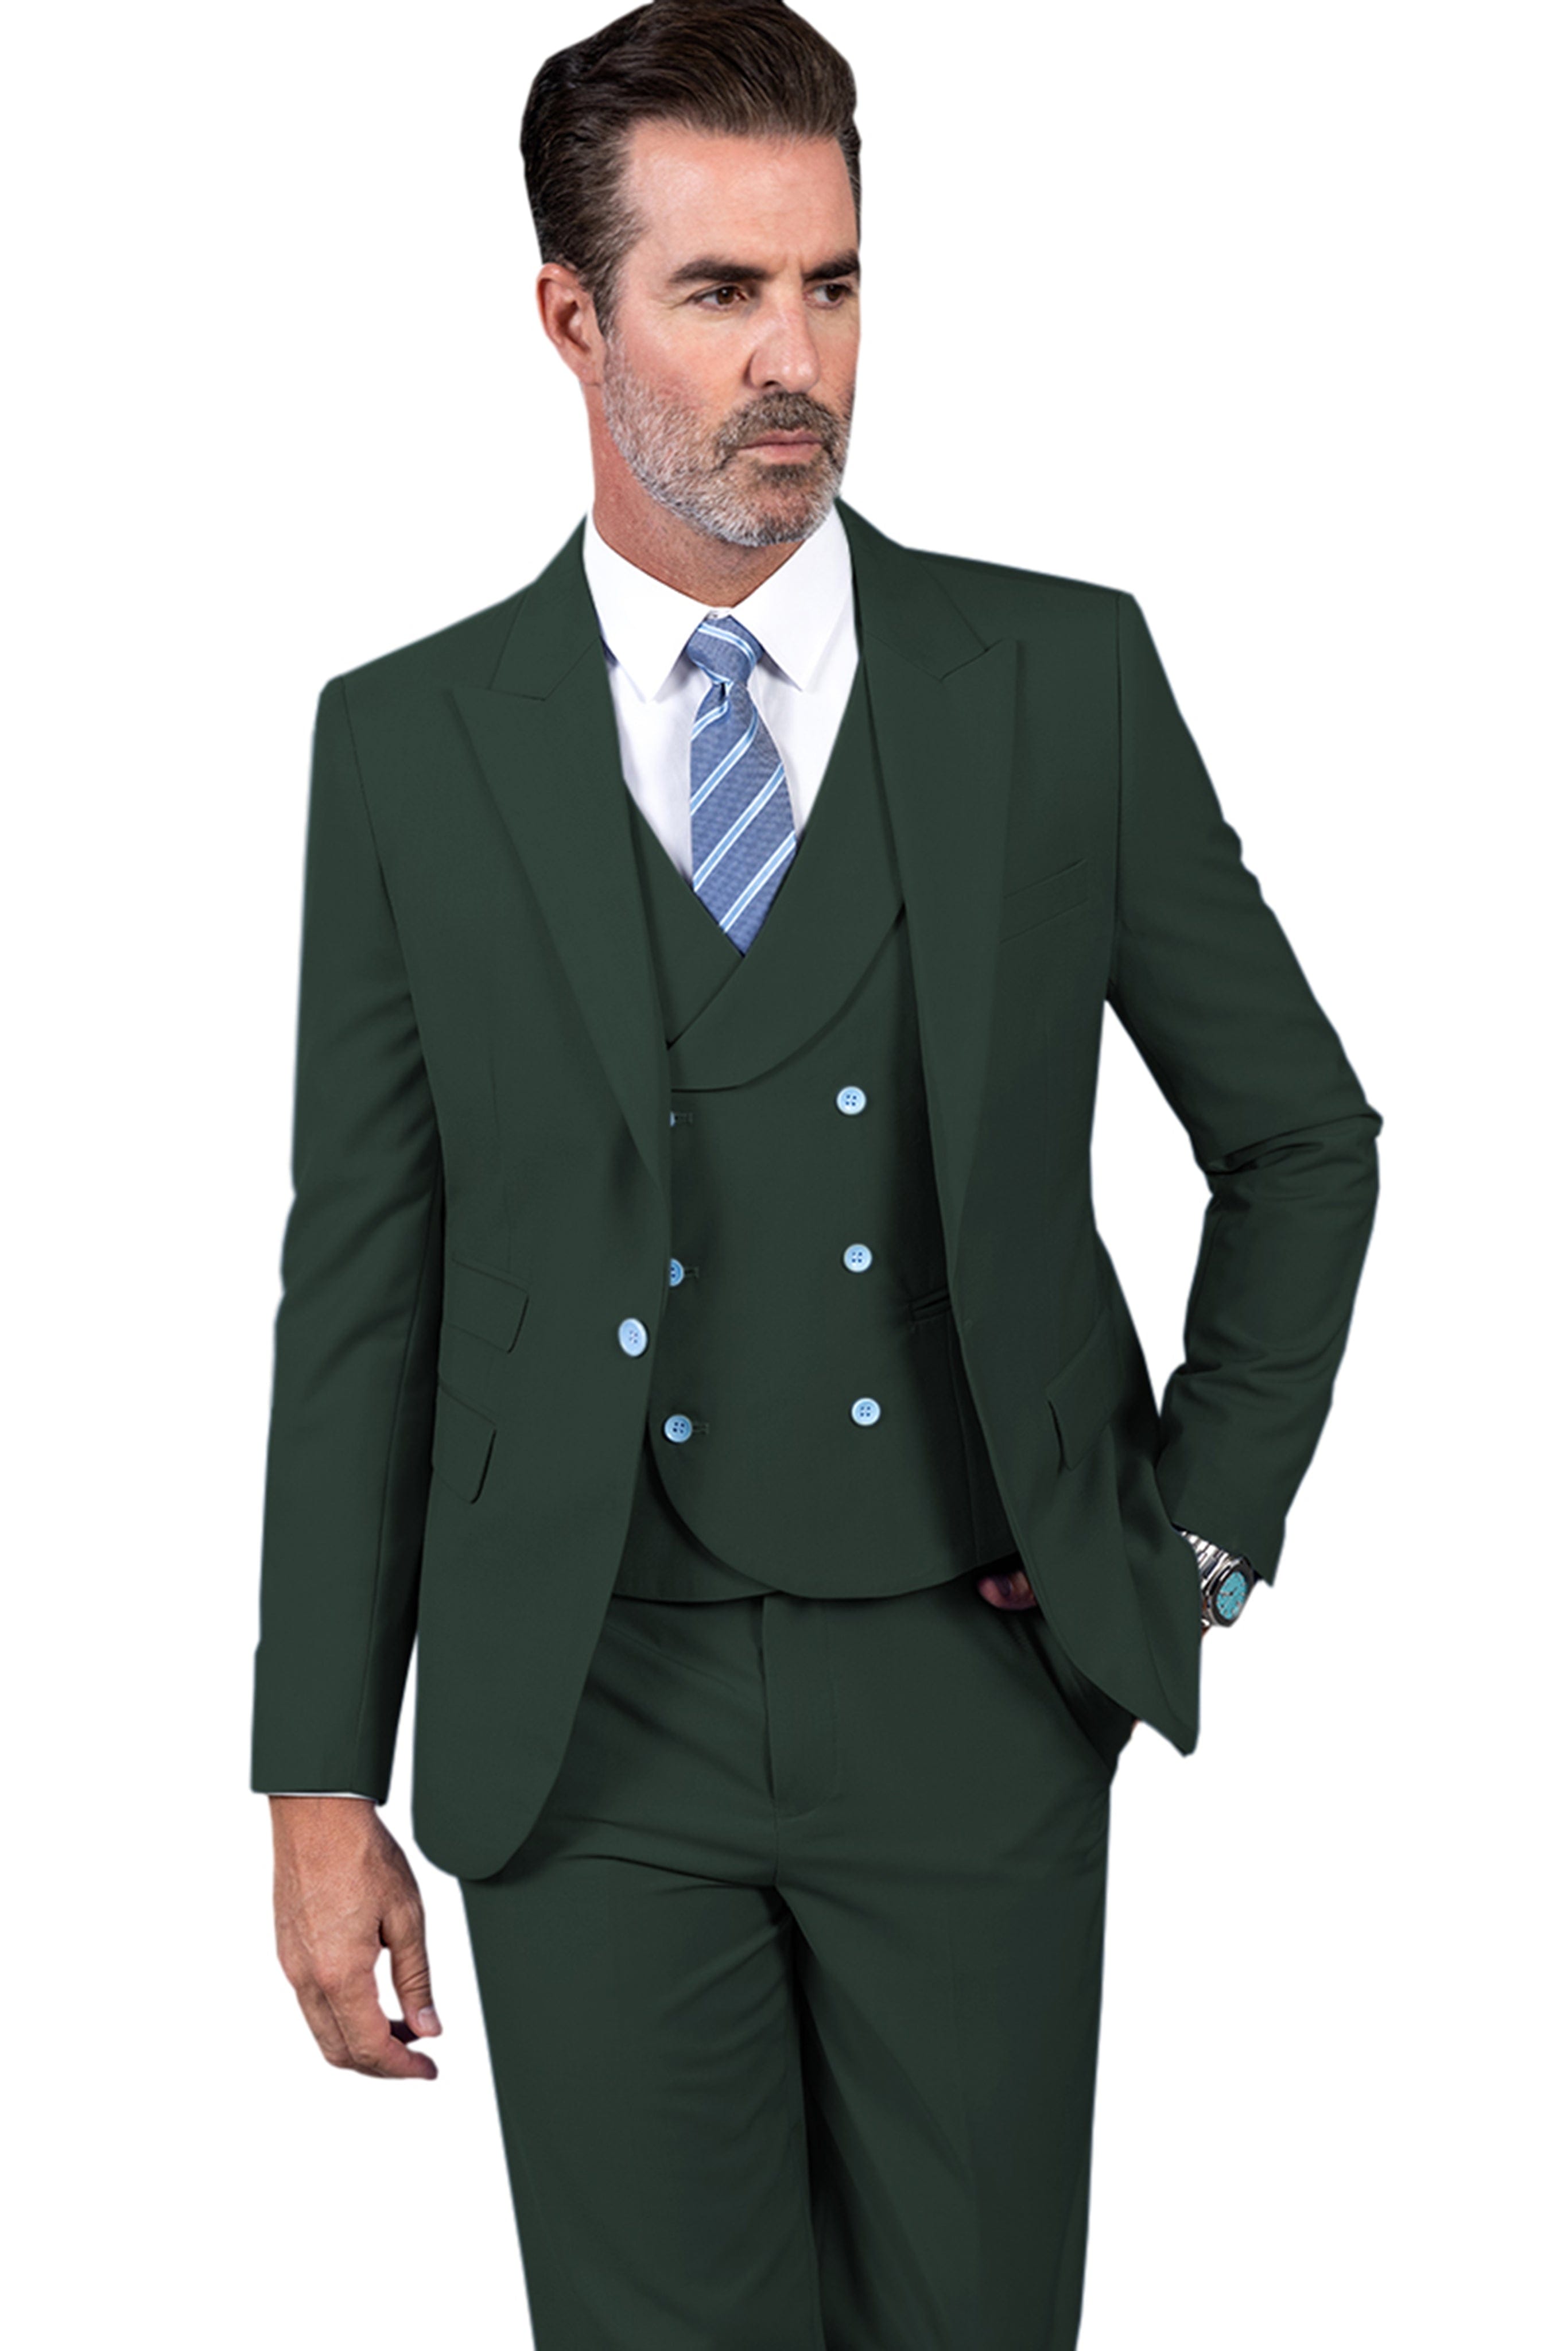 ceehuteey Men's 3 Pieces Slim Peak Lapel Regular Fit suit (Blazer+vest+Pants)